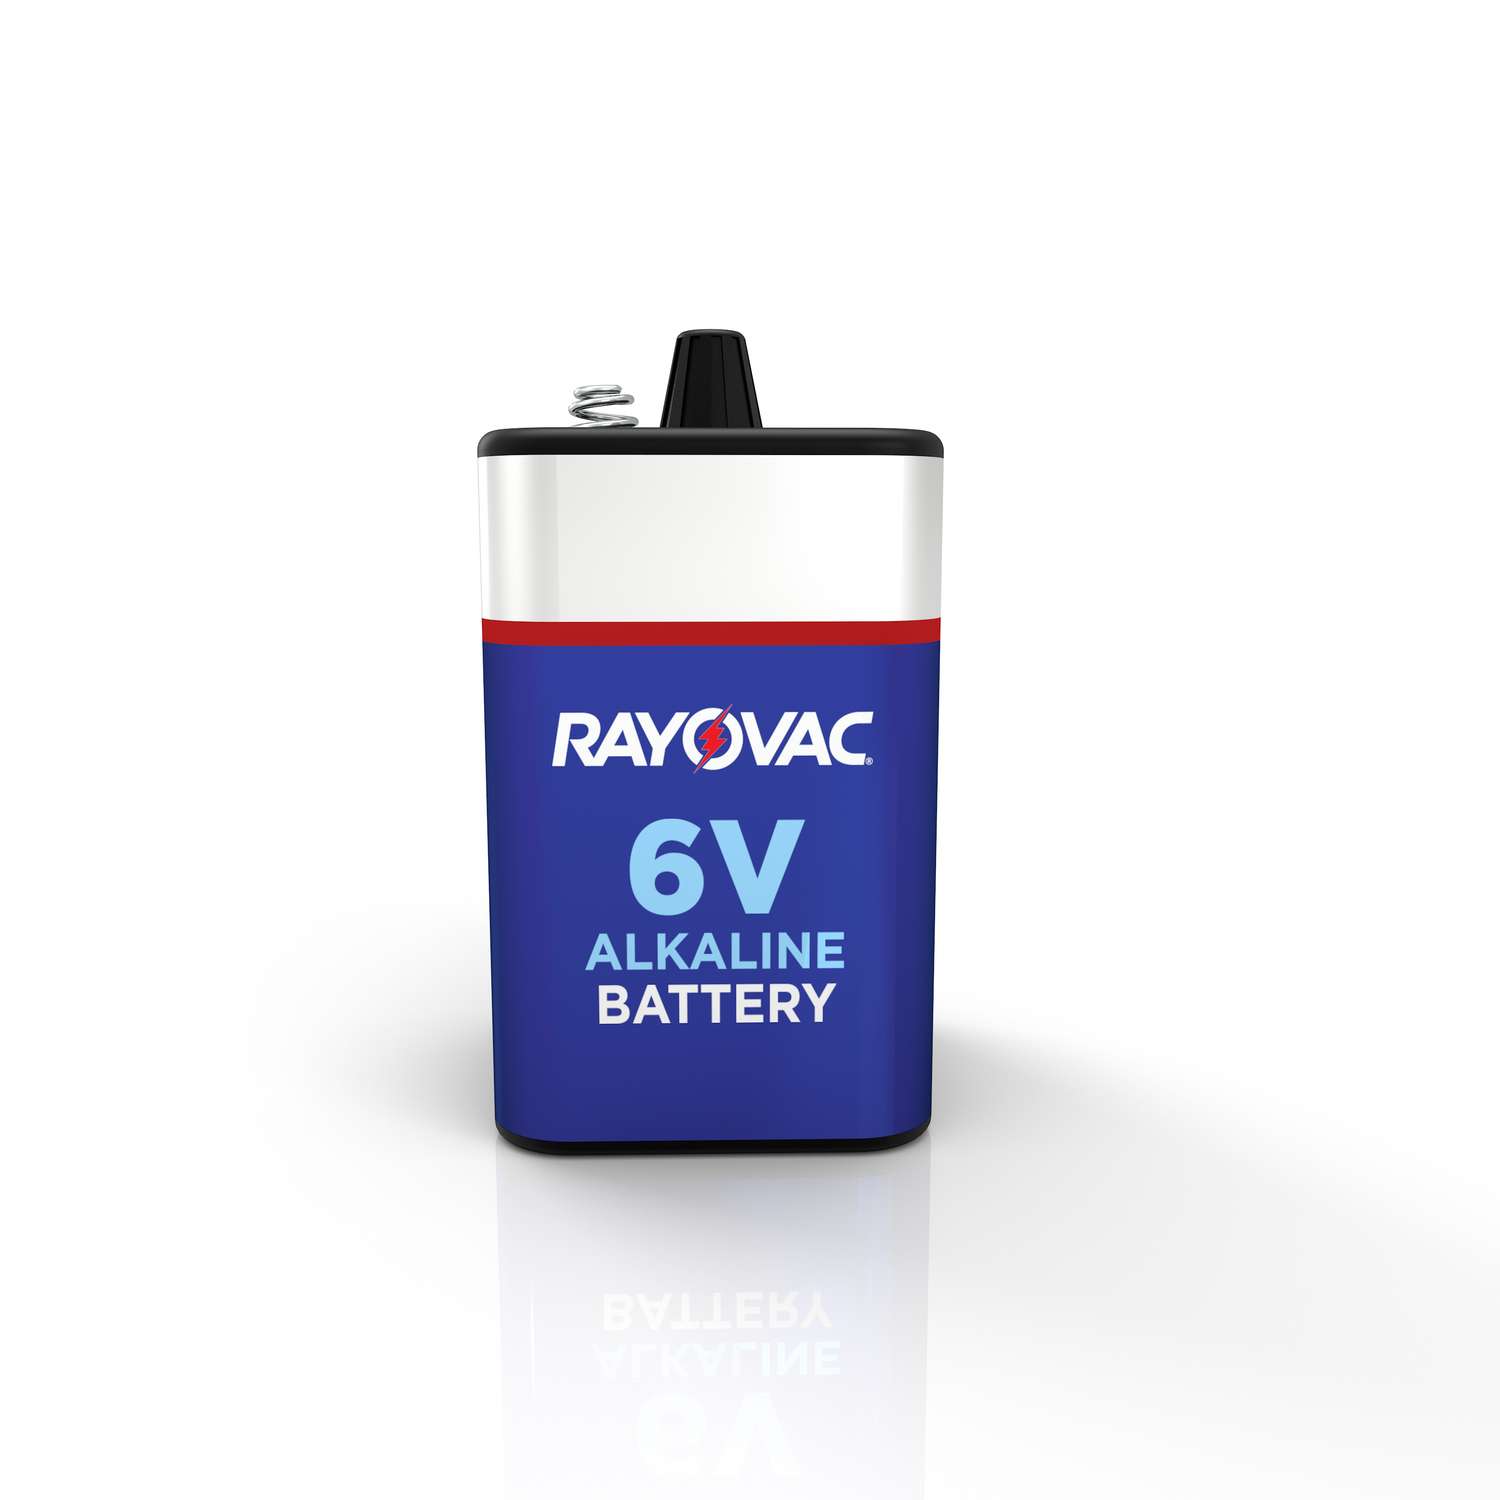 Rayovac 6 Volt Alkaline Lantern Battery